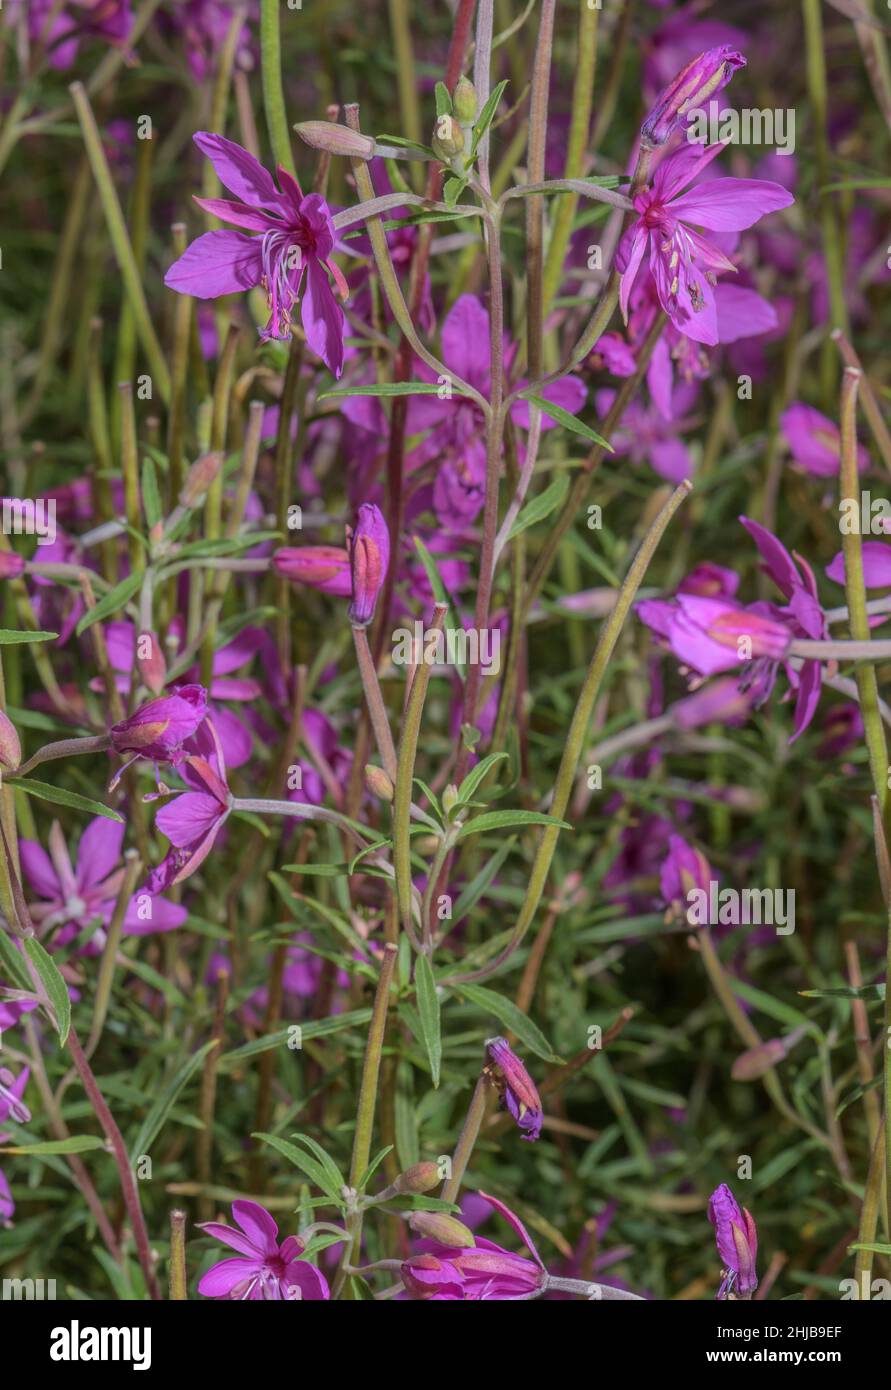 Rosemary Fireweed, Epilobium dodonaei, in flower in the Alps. Stock Photo